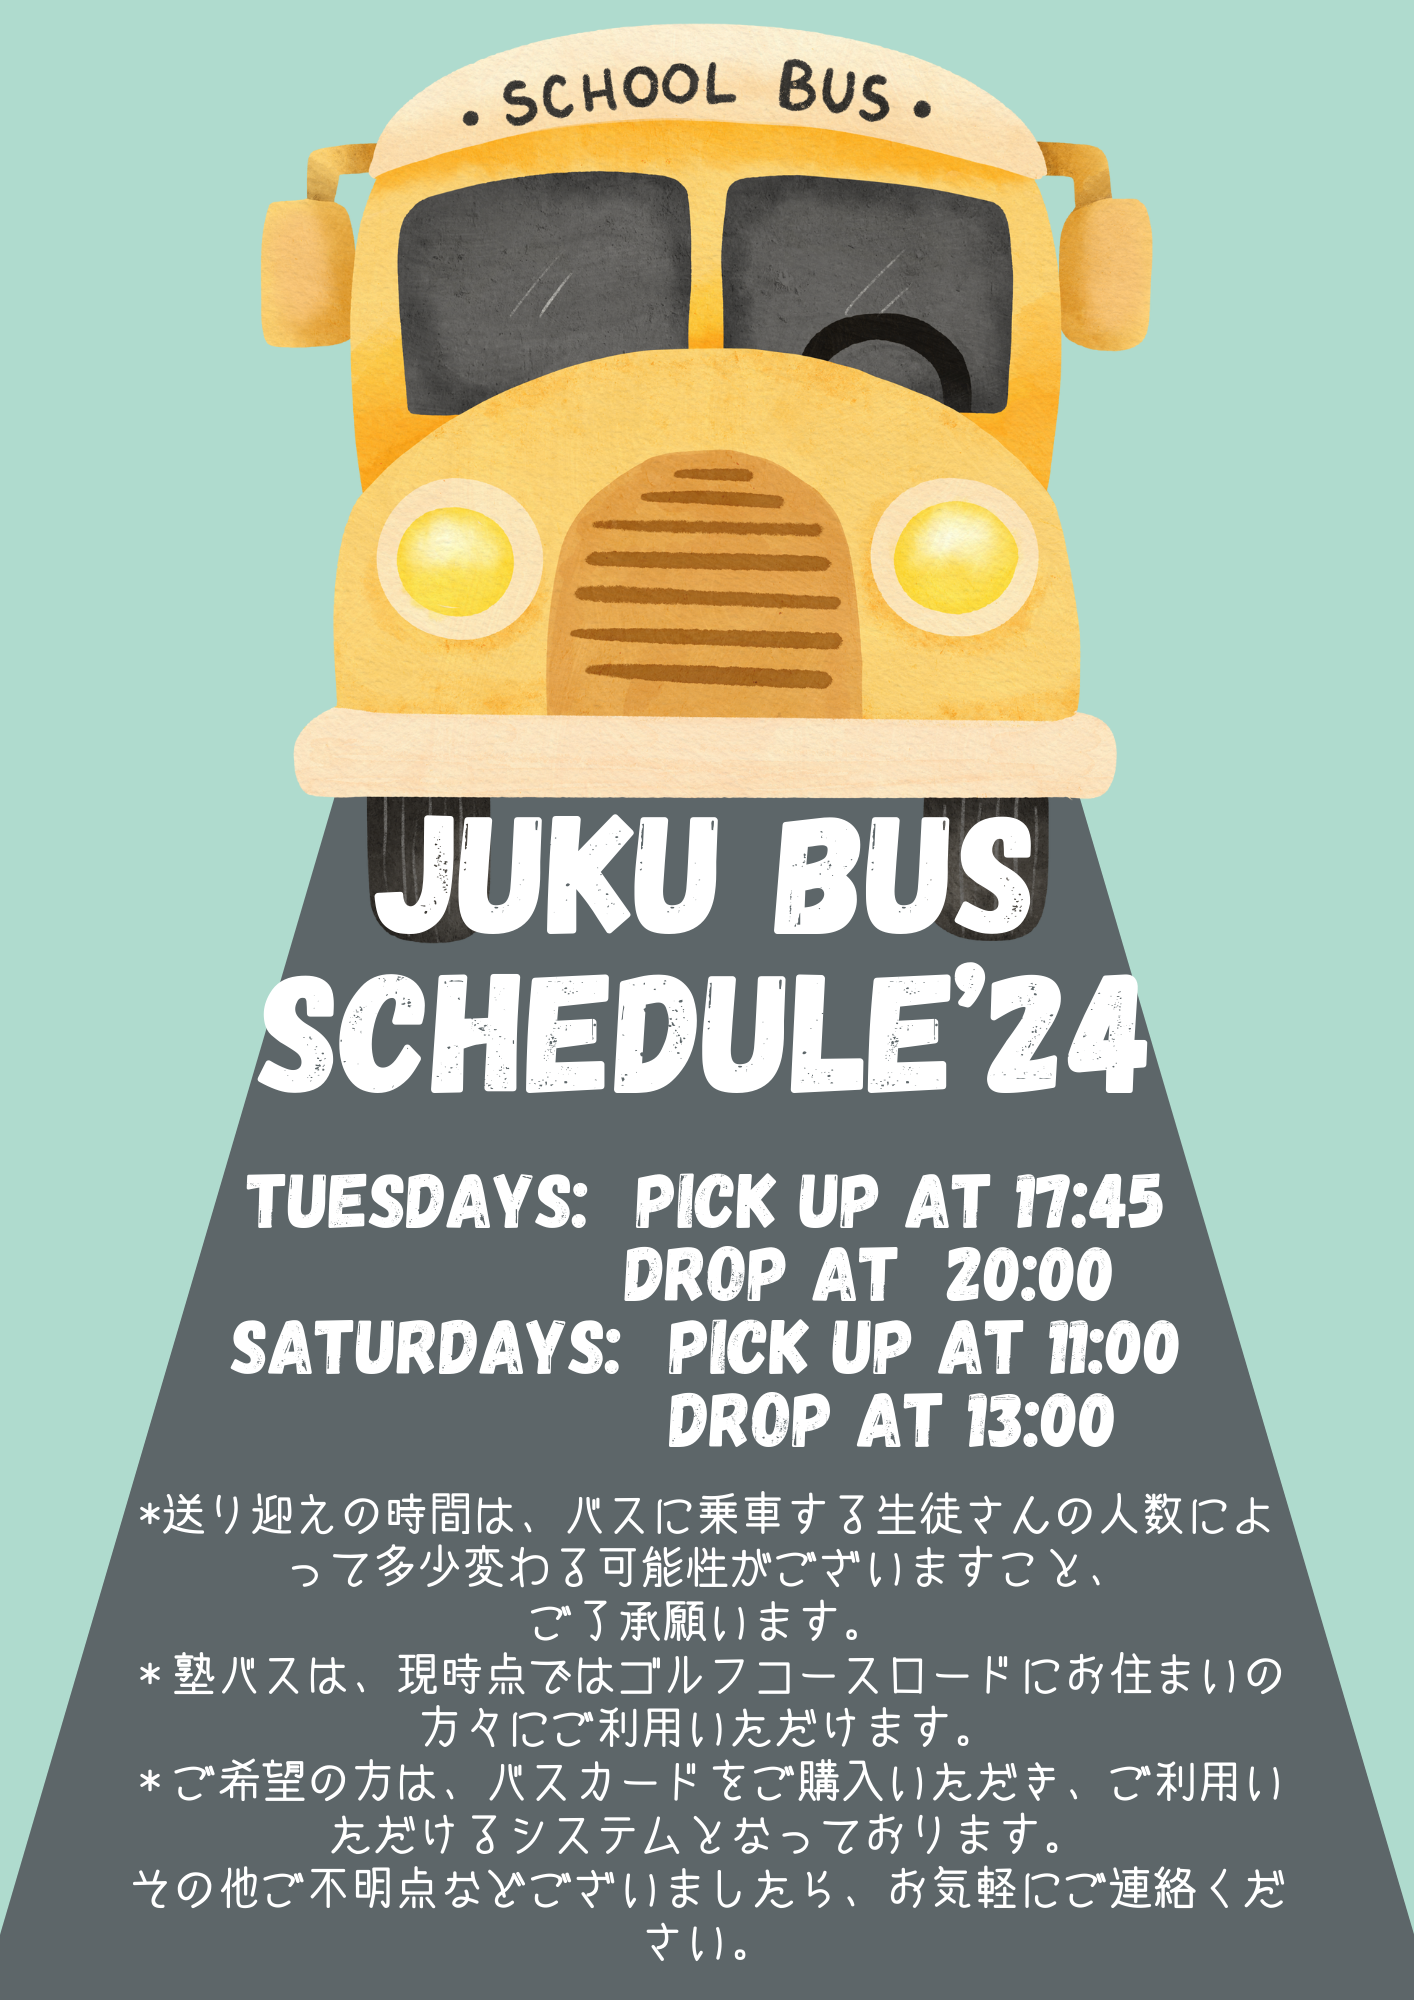 juku bus schedule'24.png